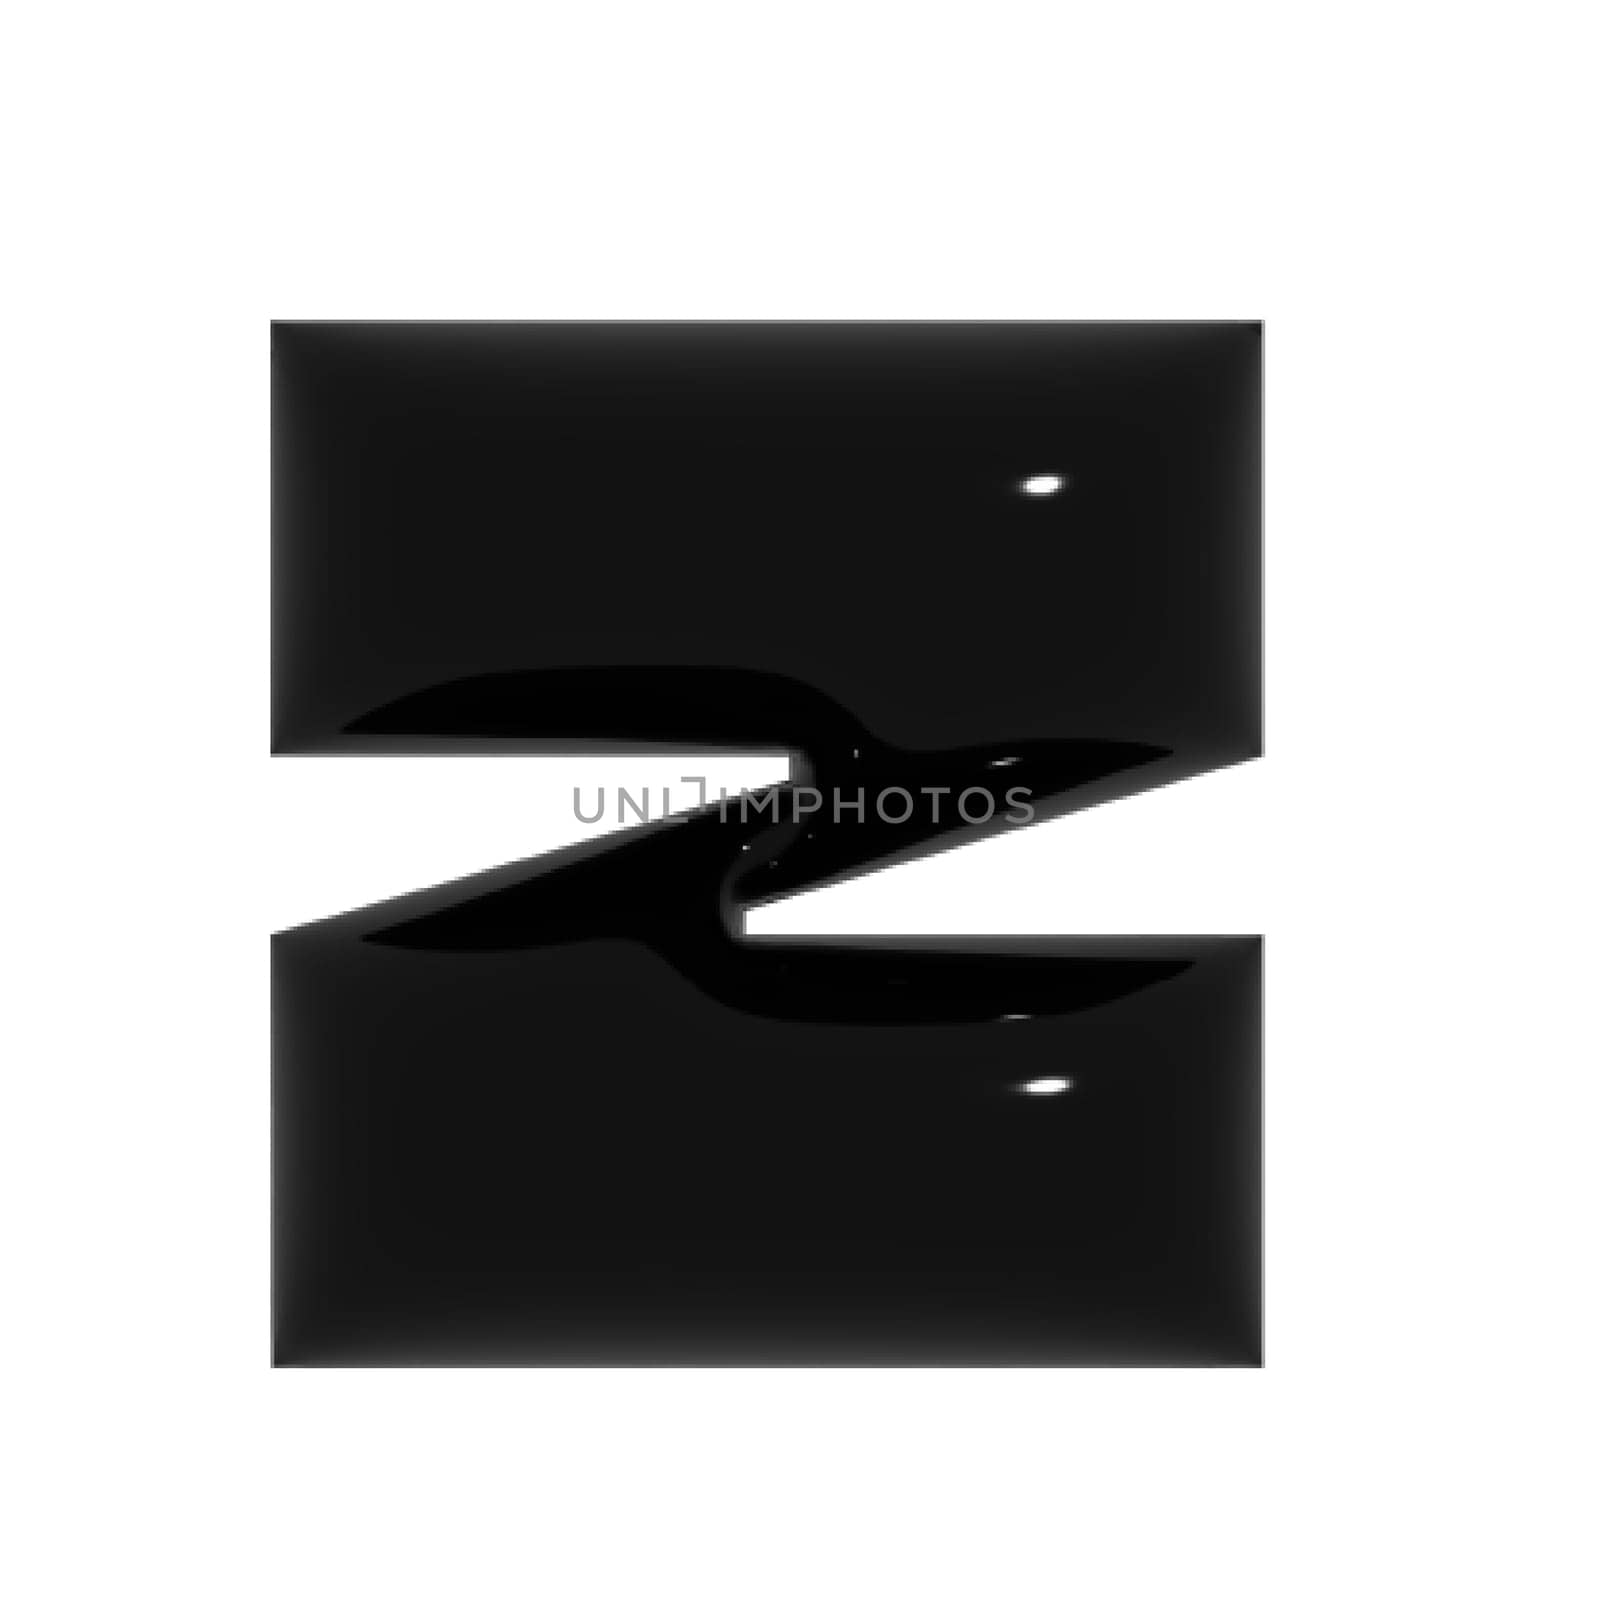 Black metal shiny reflective letter Z 3D illustration by Dustick